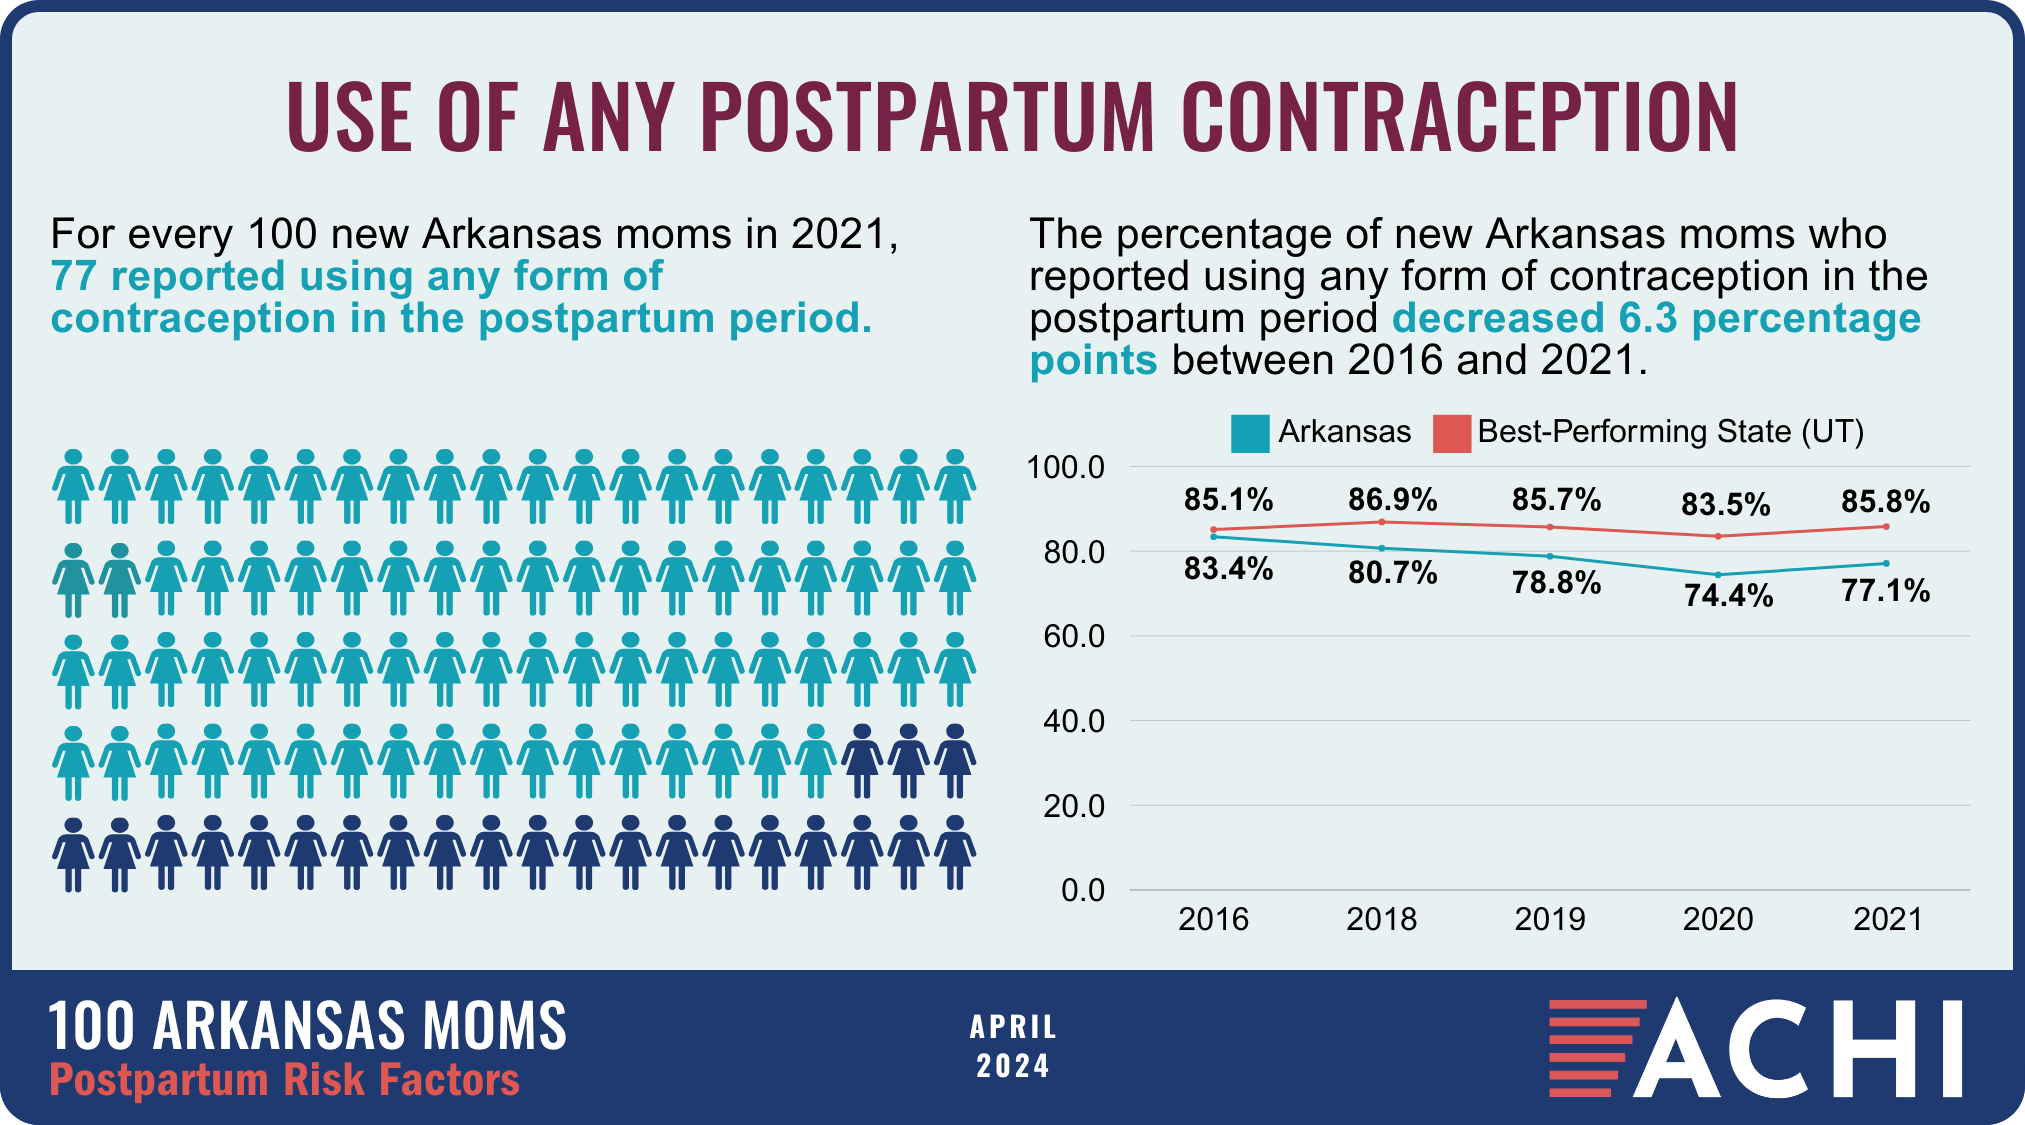 24_240509_100 Arkansas Moms_Postpartum Risk Factors_Any Contraception